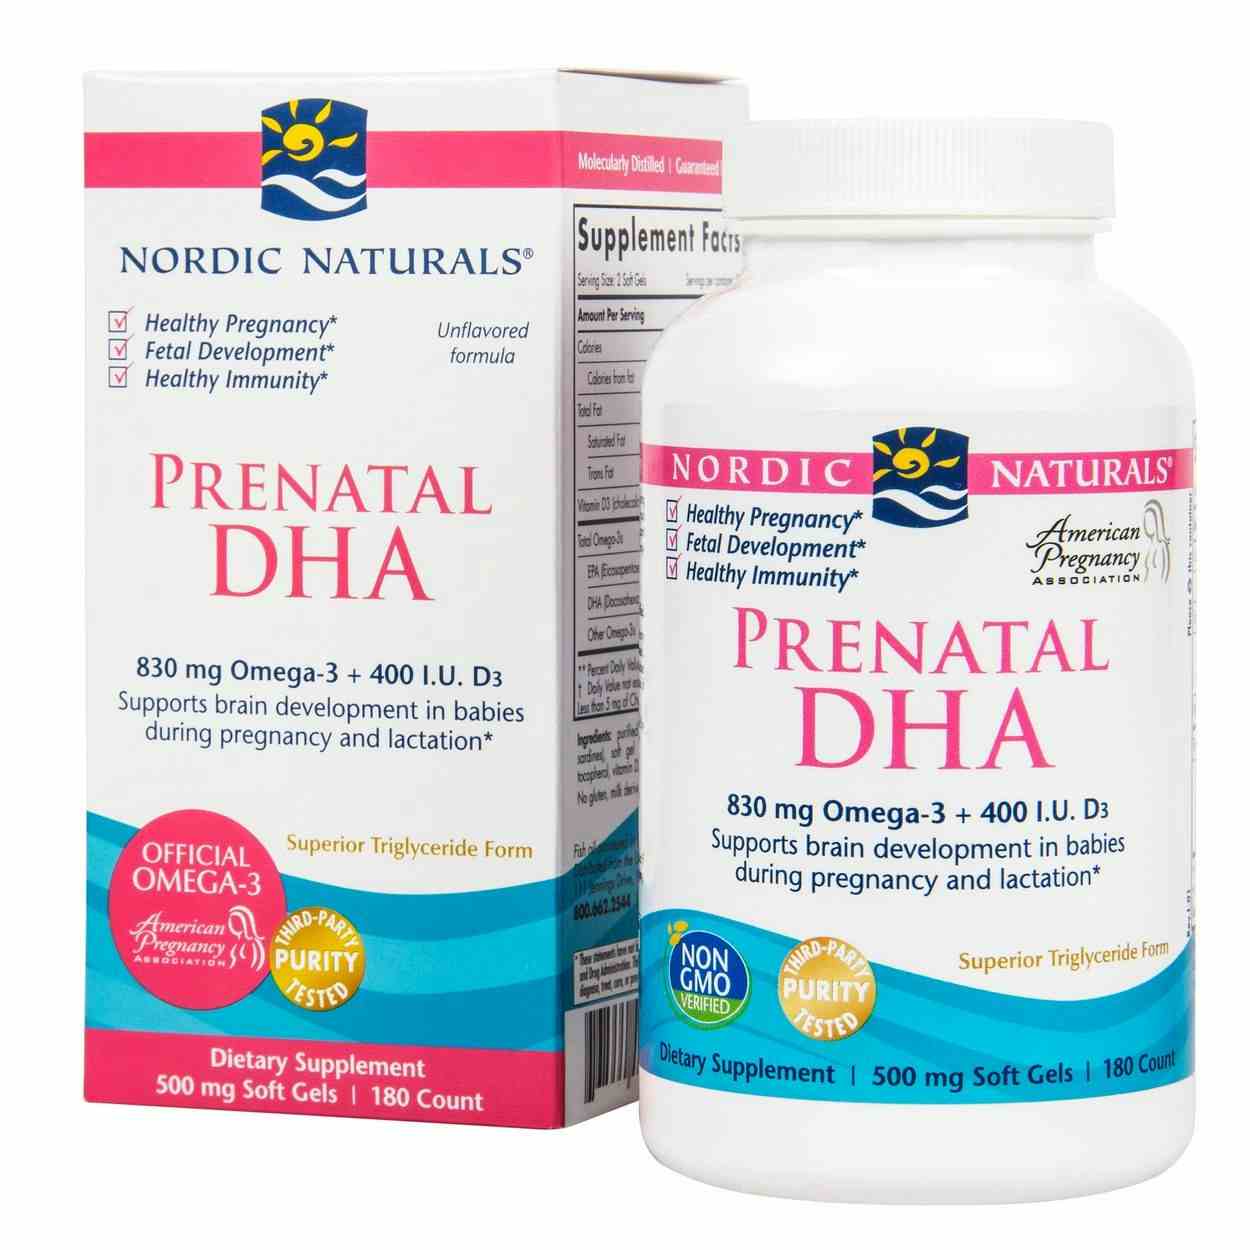 Nordic Naturals Prenatal DHA, 180 Soft Gels, RUS-01748, 1 Each 